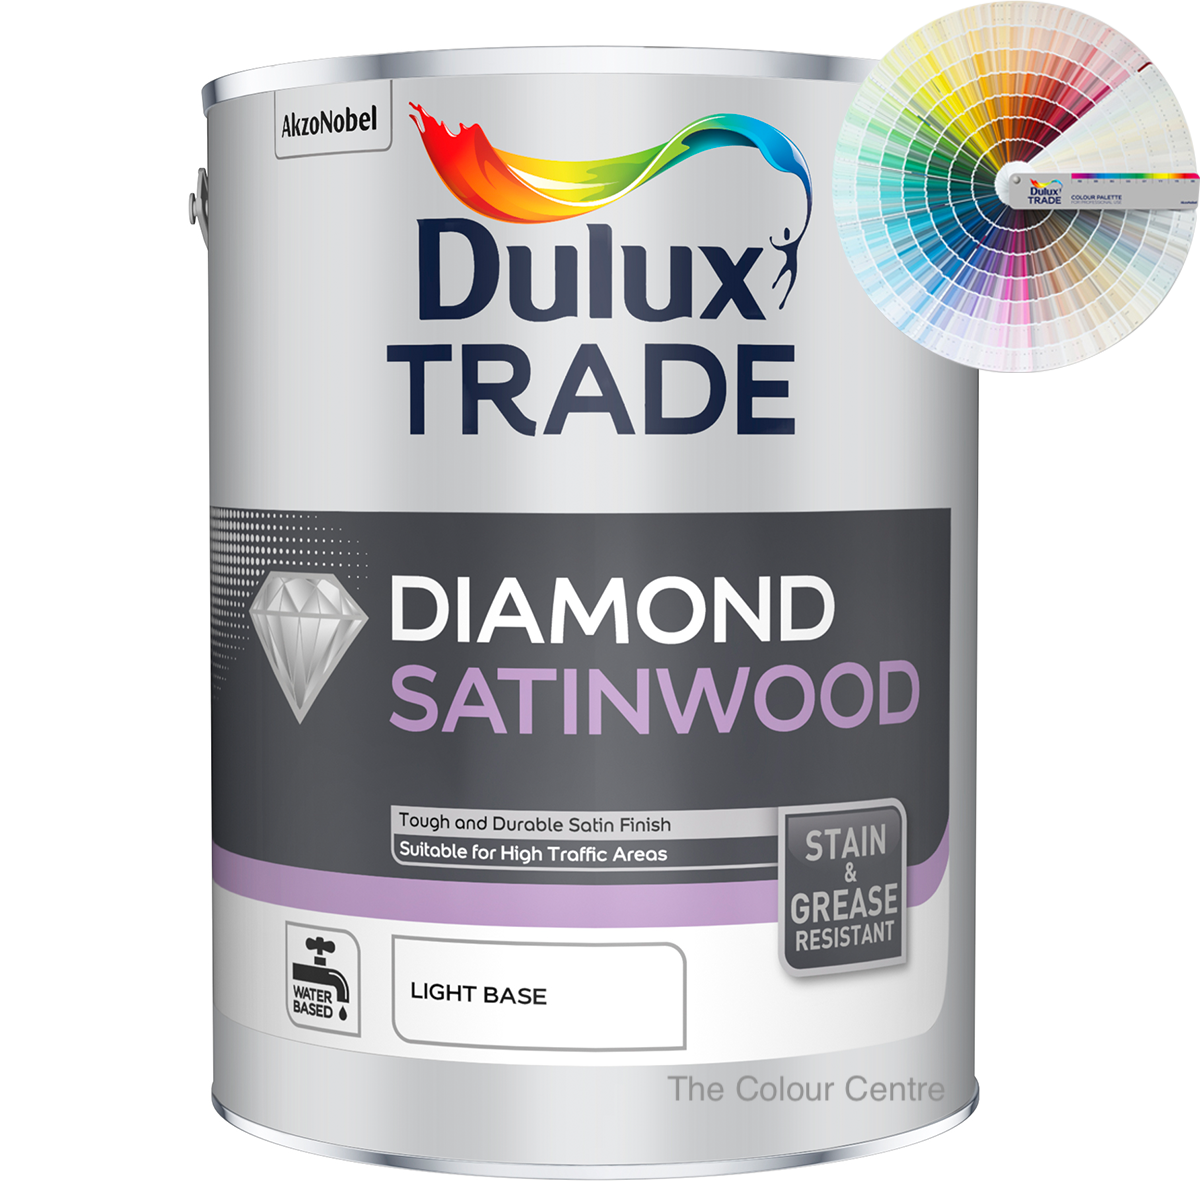 Dulux Trade Diamond Satinwood Tinted Colour 5L